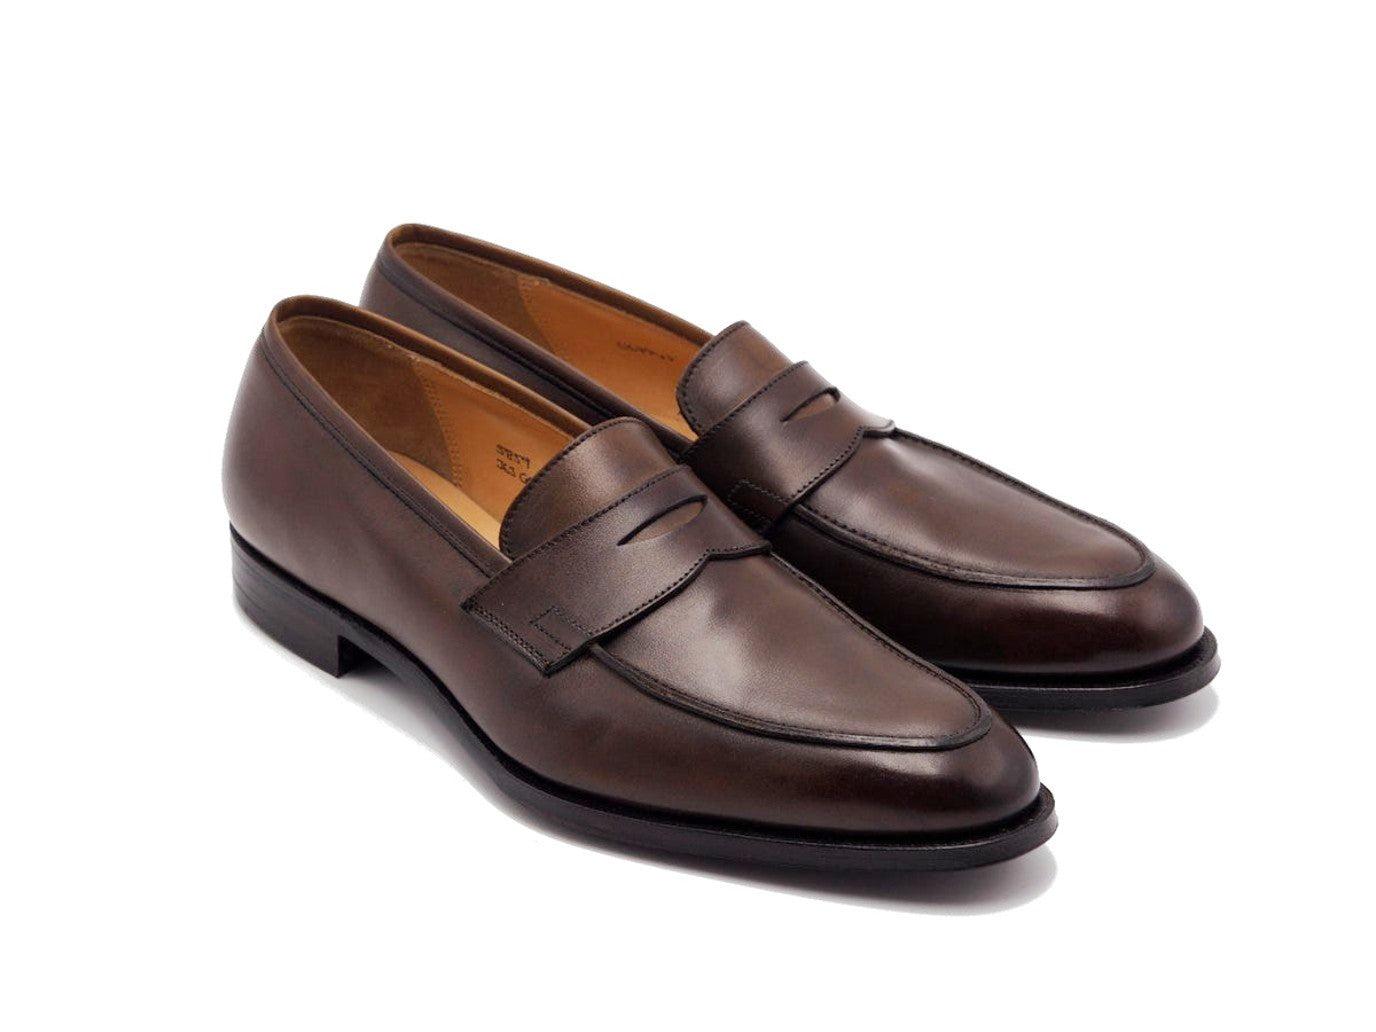 Crockett & Jones | Mens Shoes, Handmade in England – Page 2 – Double Monk